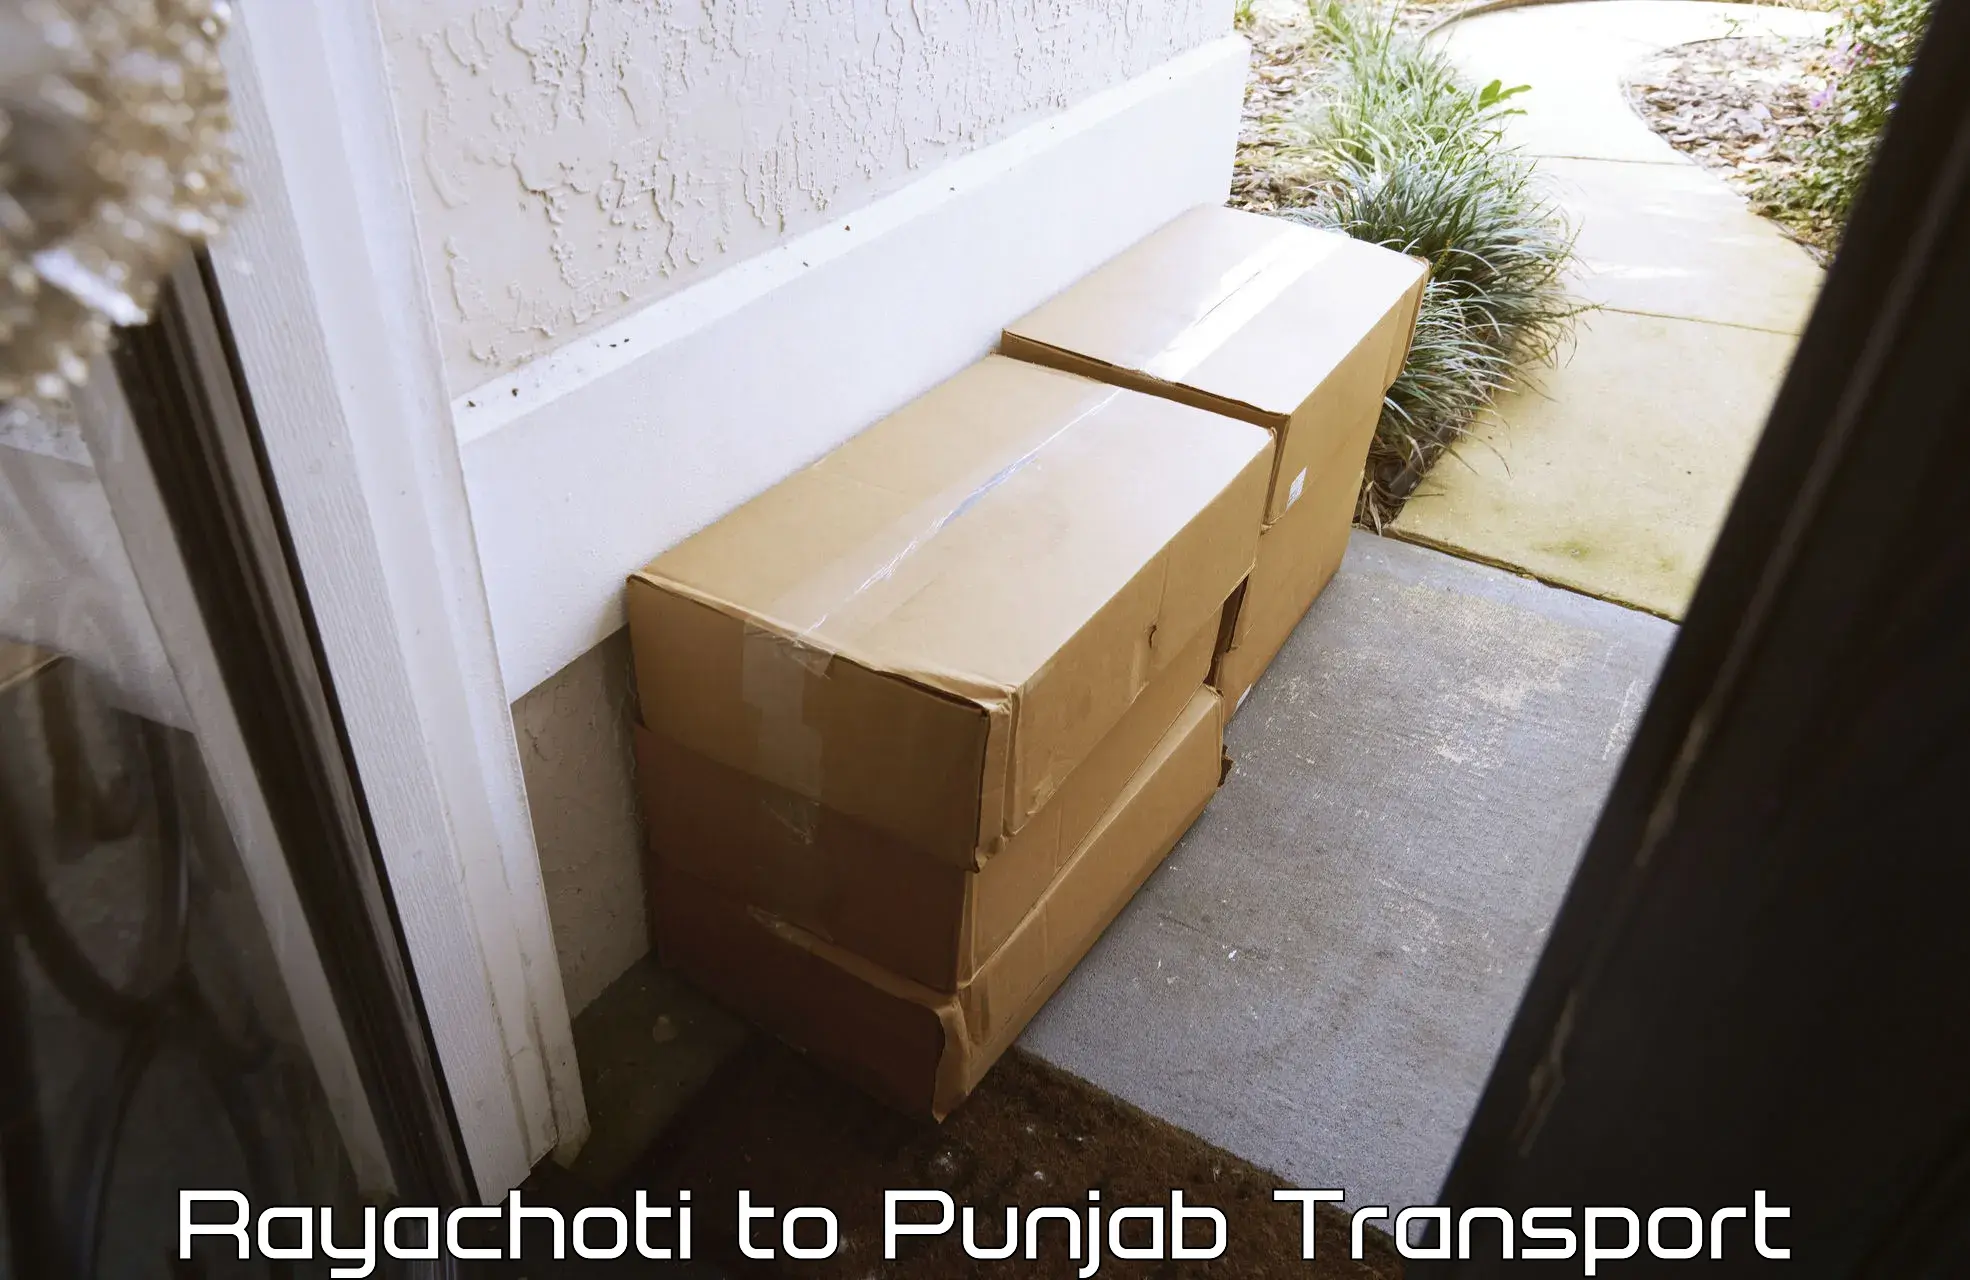 Goods delivery service Rayachoti to Punjab